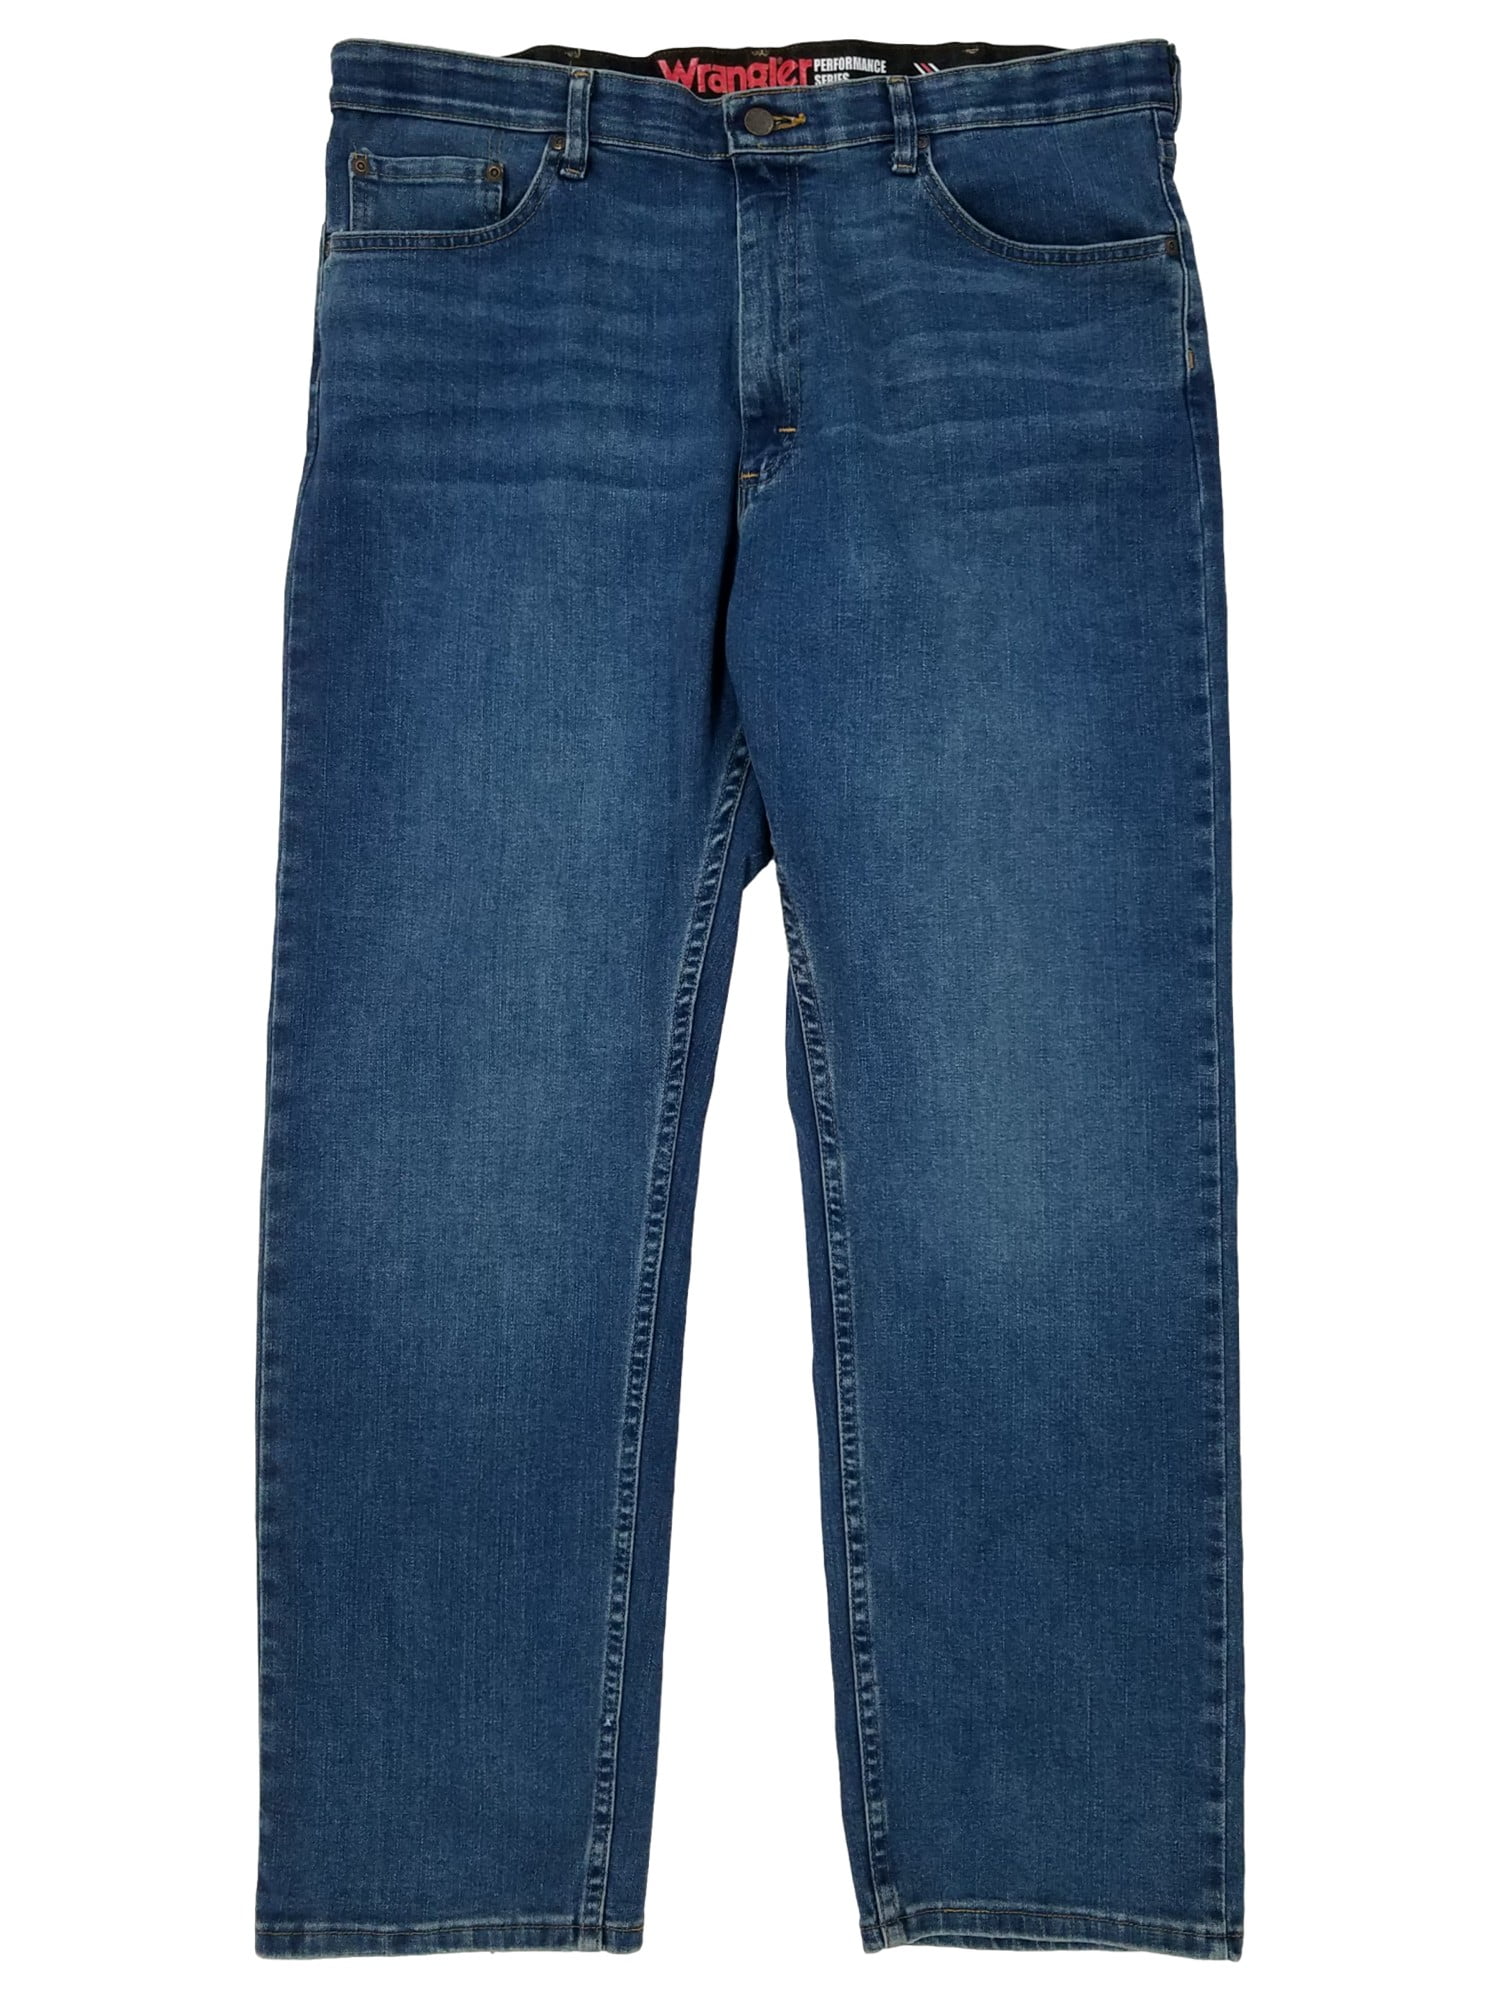 Wrangler Mens Blue Performance Series Comfort Flex Regular Fit Jeans ...